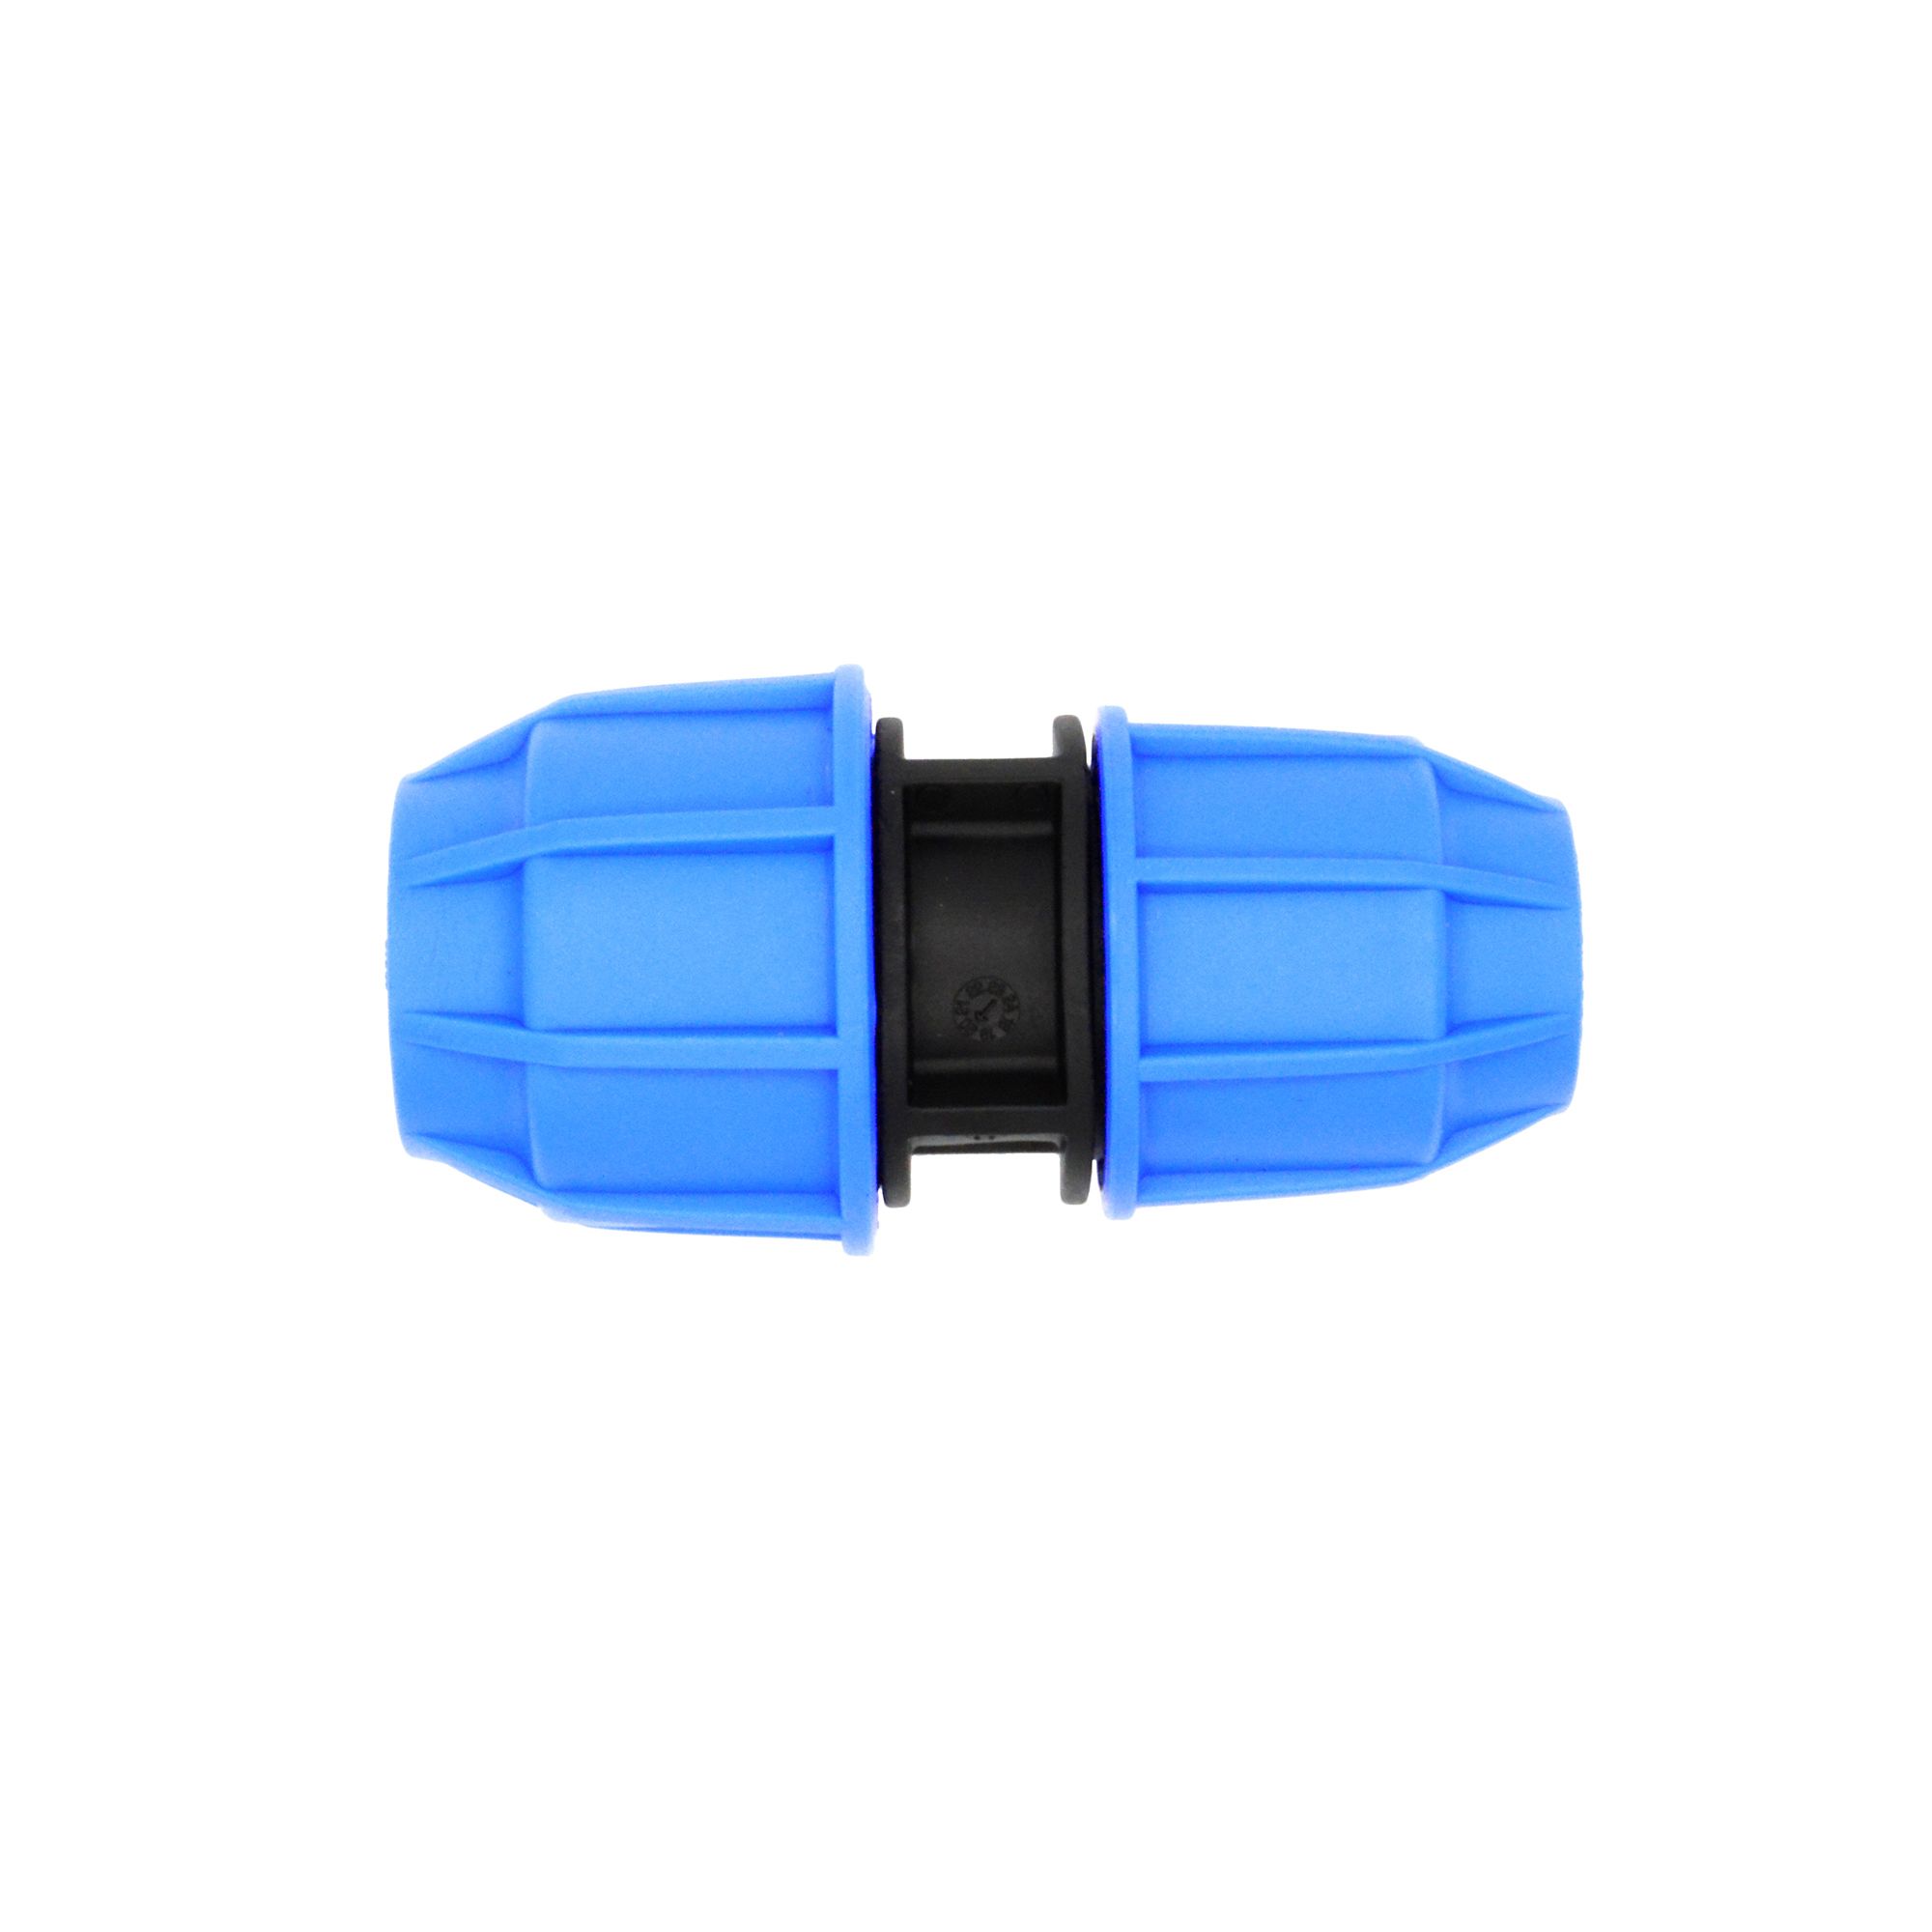 FloPlast Blue Straight Reducing Coupler (Dia)5.34mm